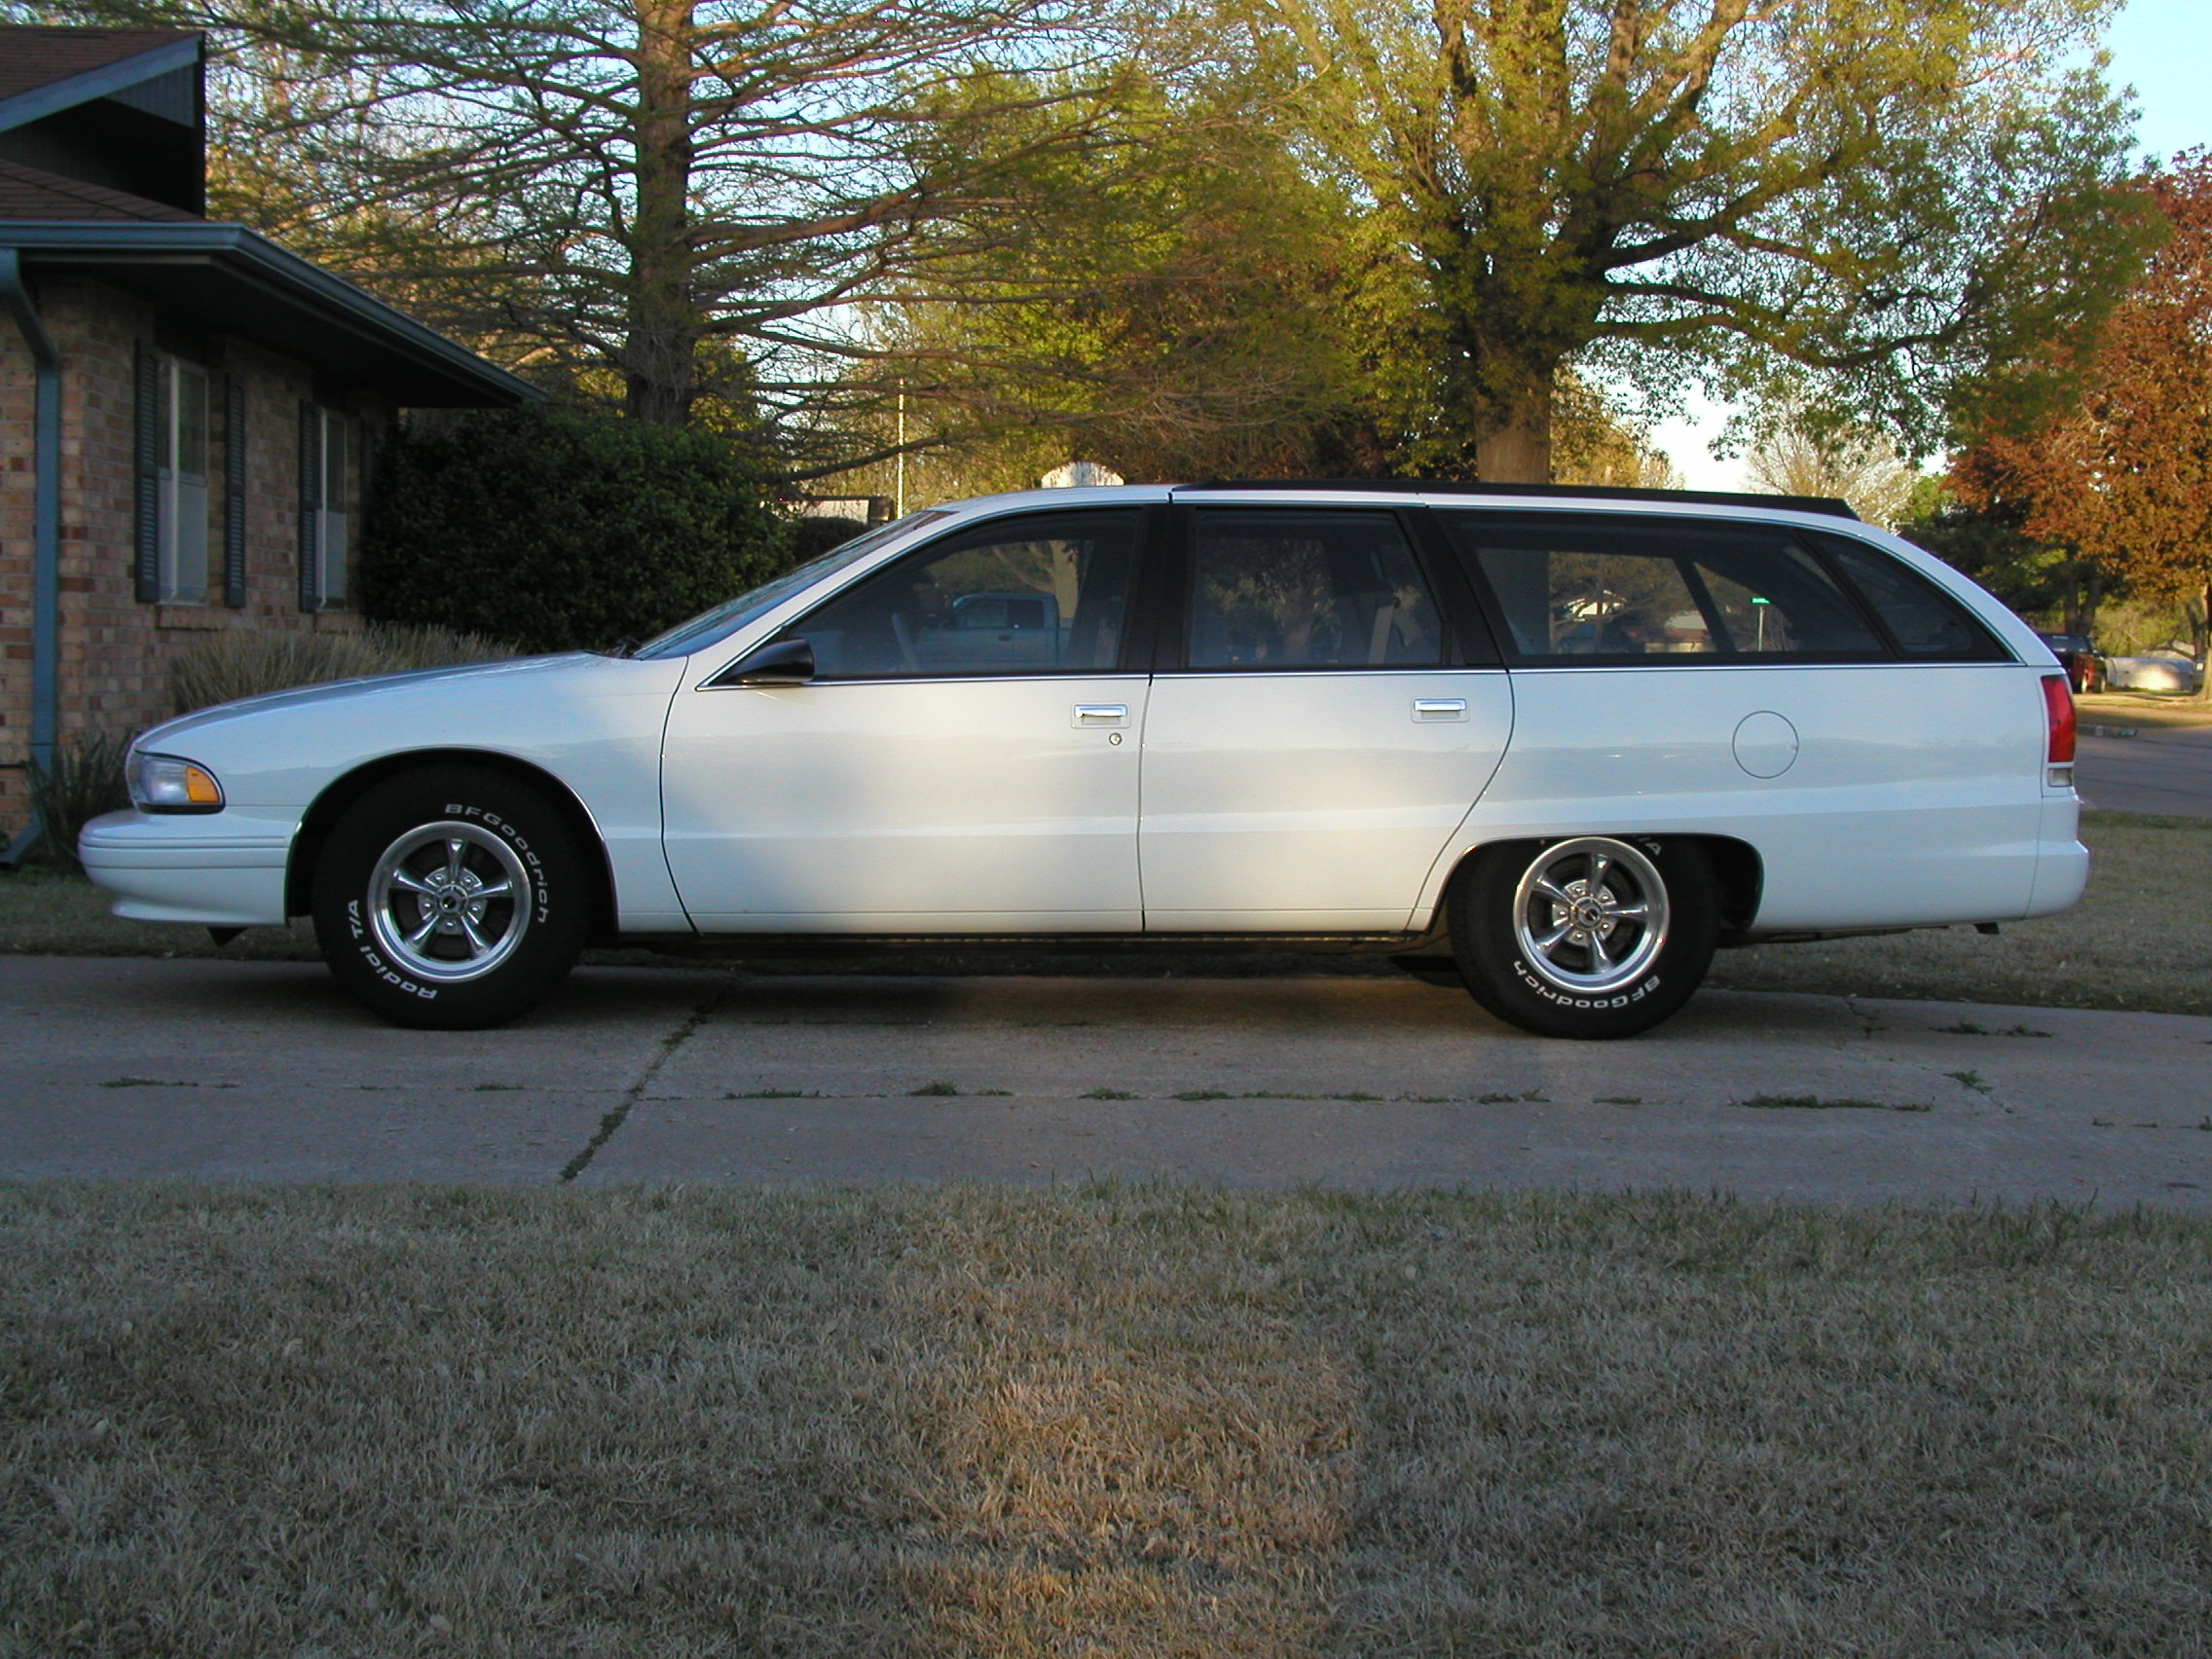  1994 Chevrolet Caprice wagon